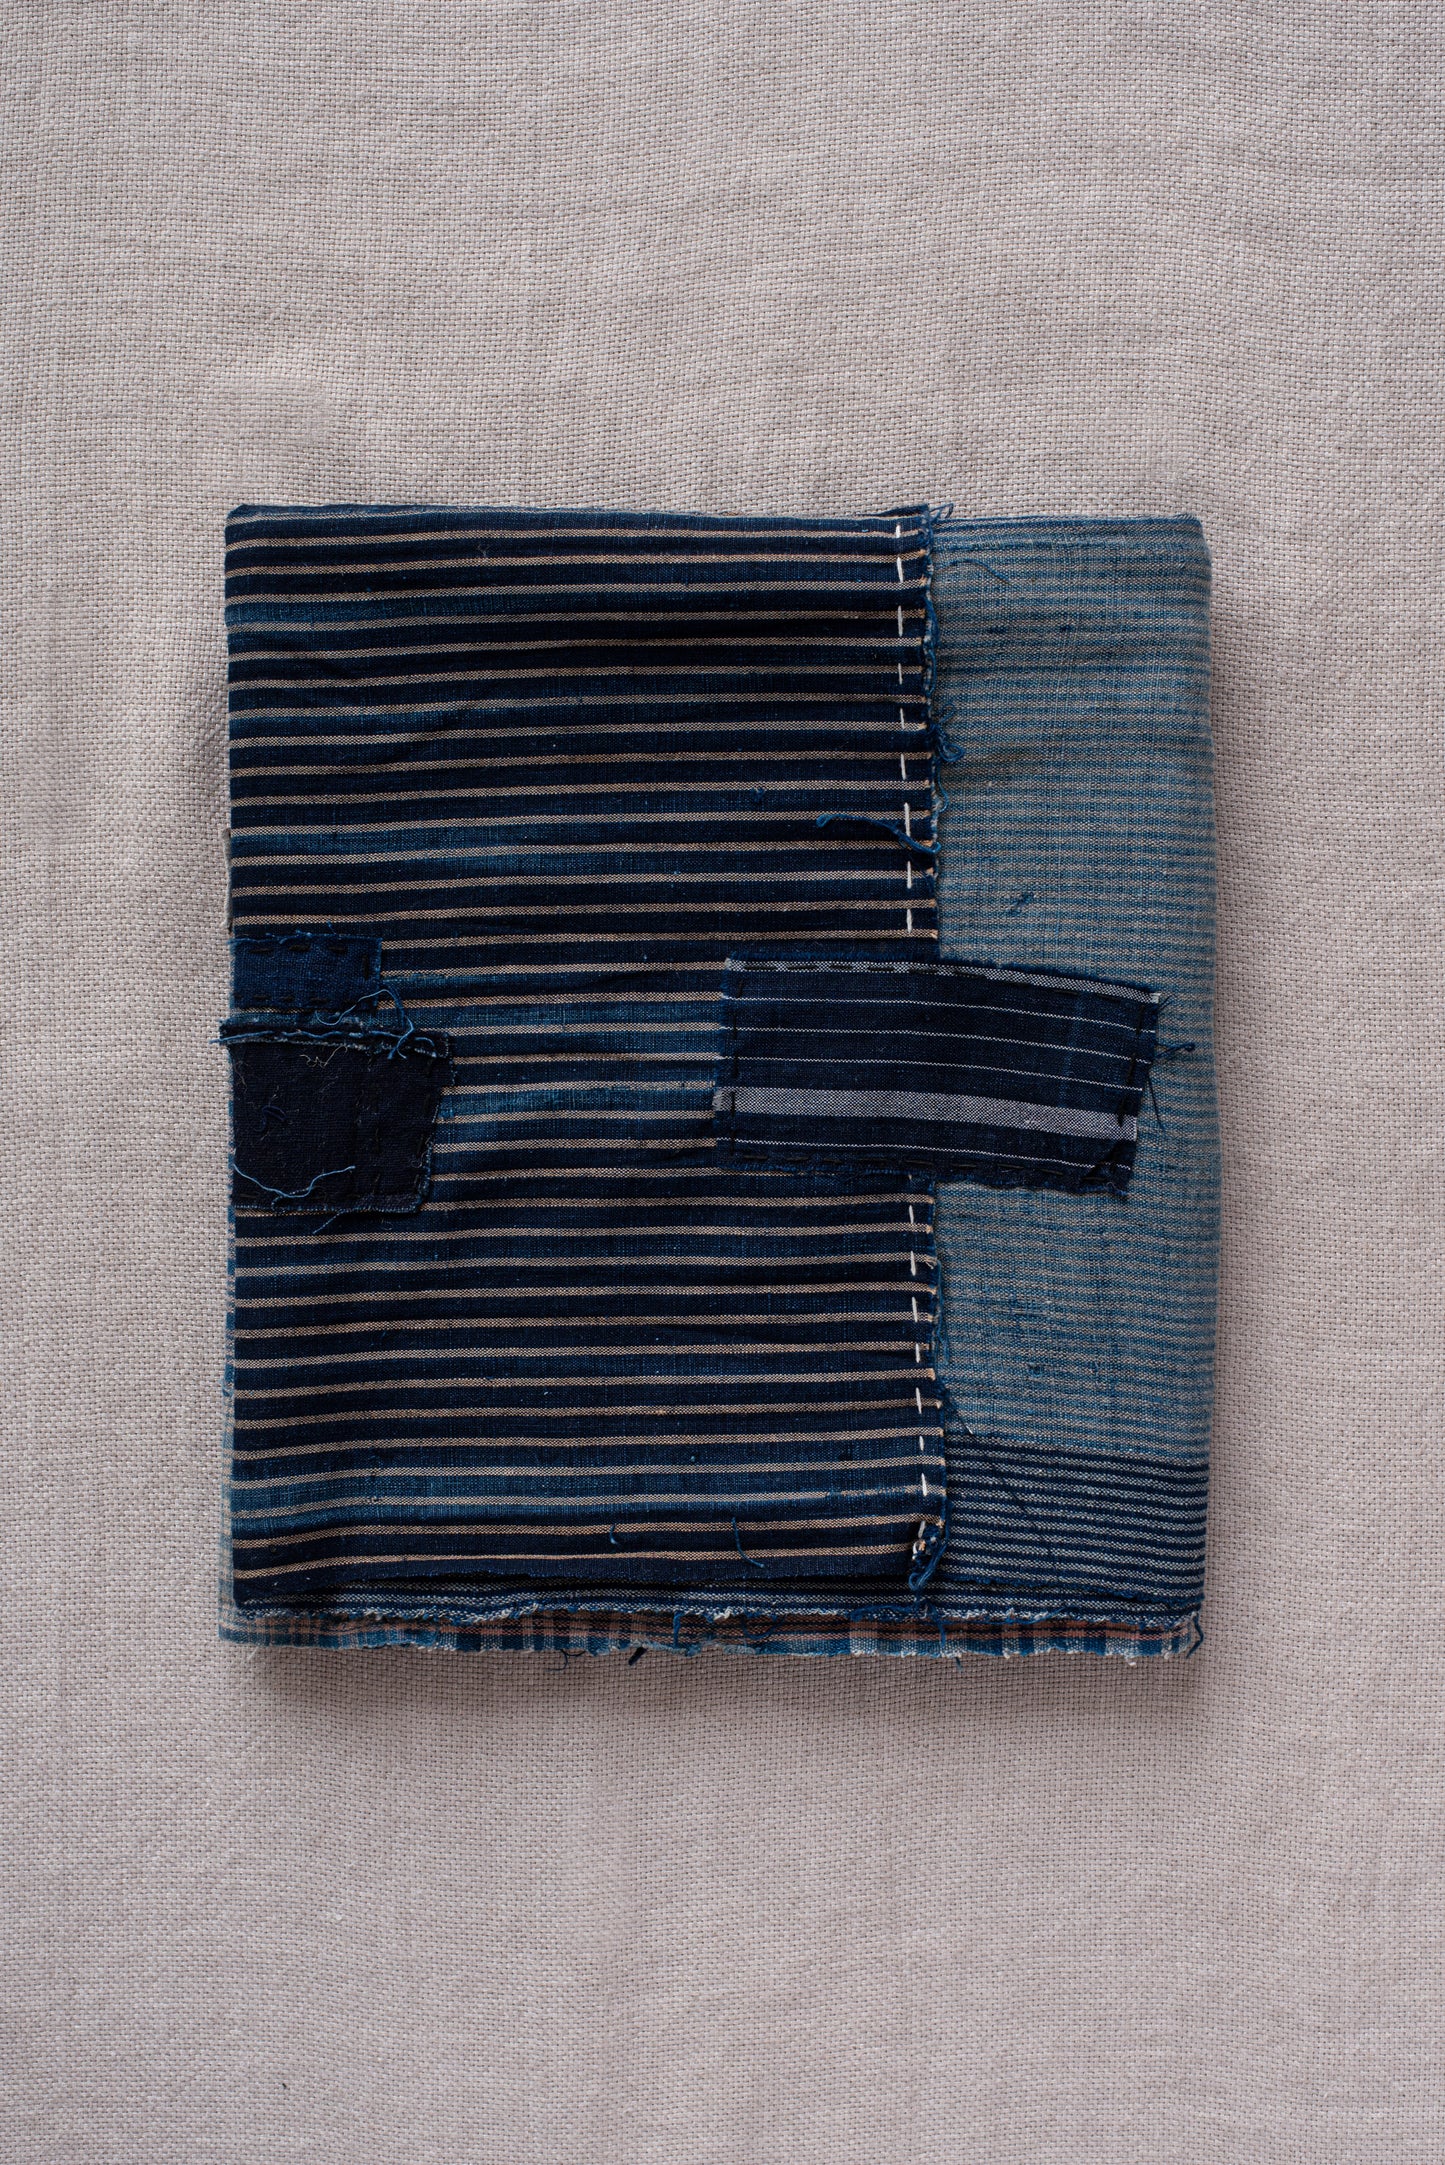 Antique Japanese Textile - Boro I